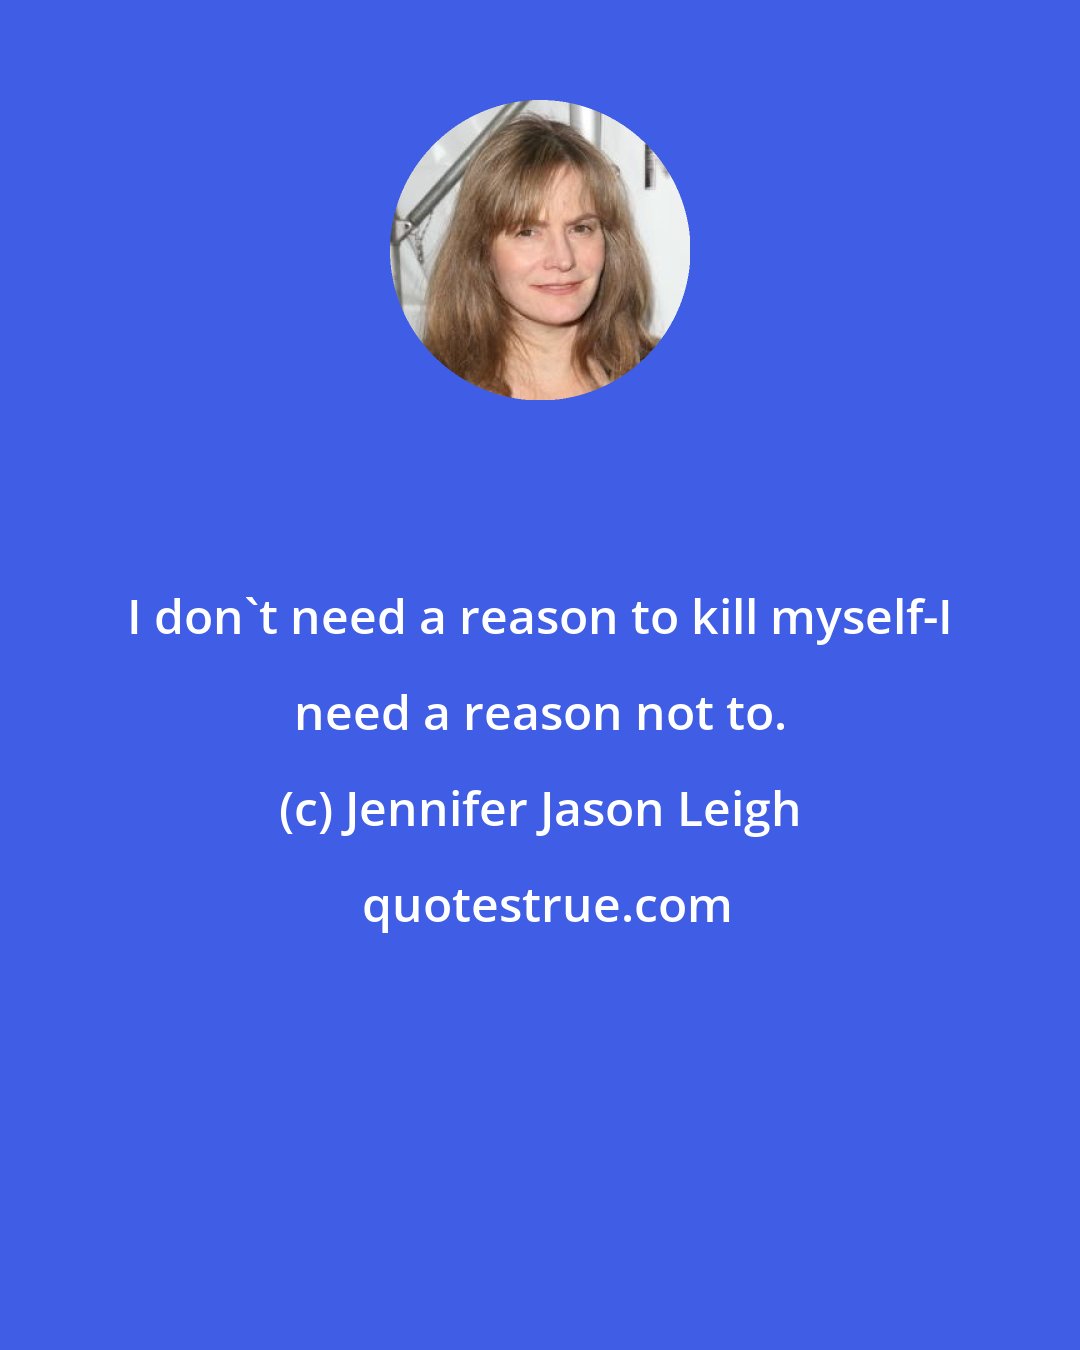 Jennifer Jason Leigh: I don't need a reason to kill myself-I need a reason not to.